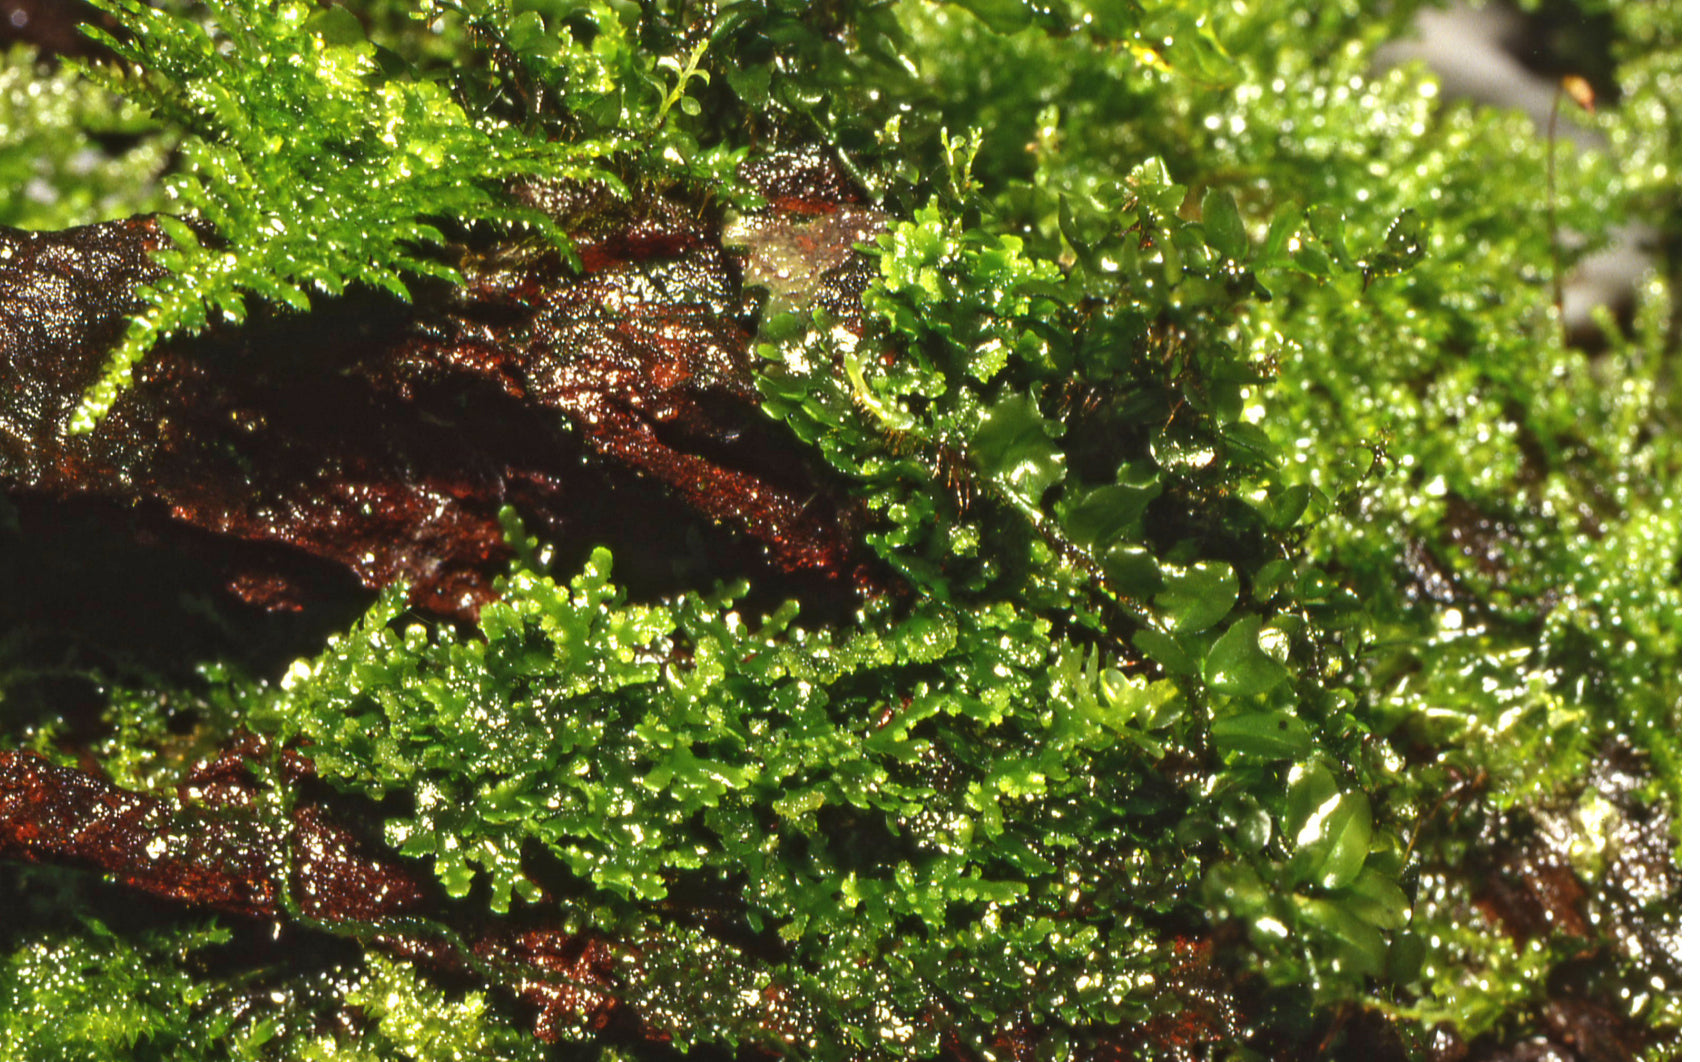 Riccardia chamedryfolia - Korallenmoos